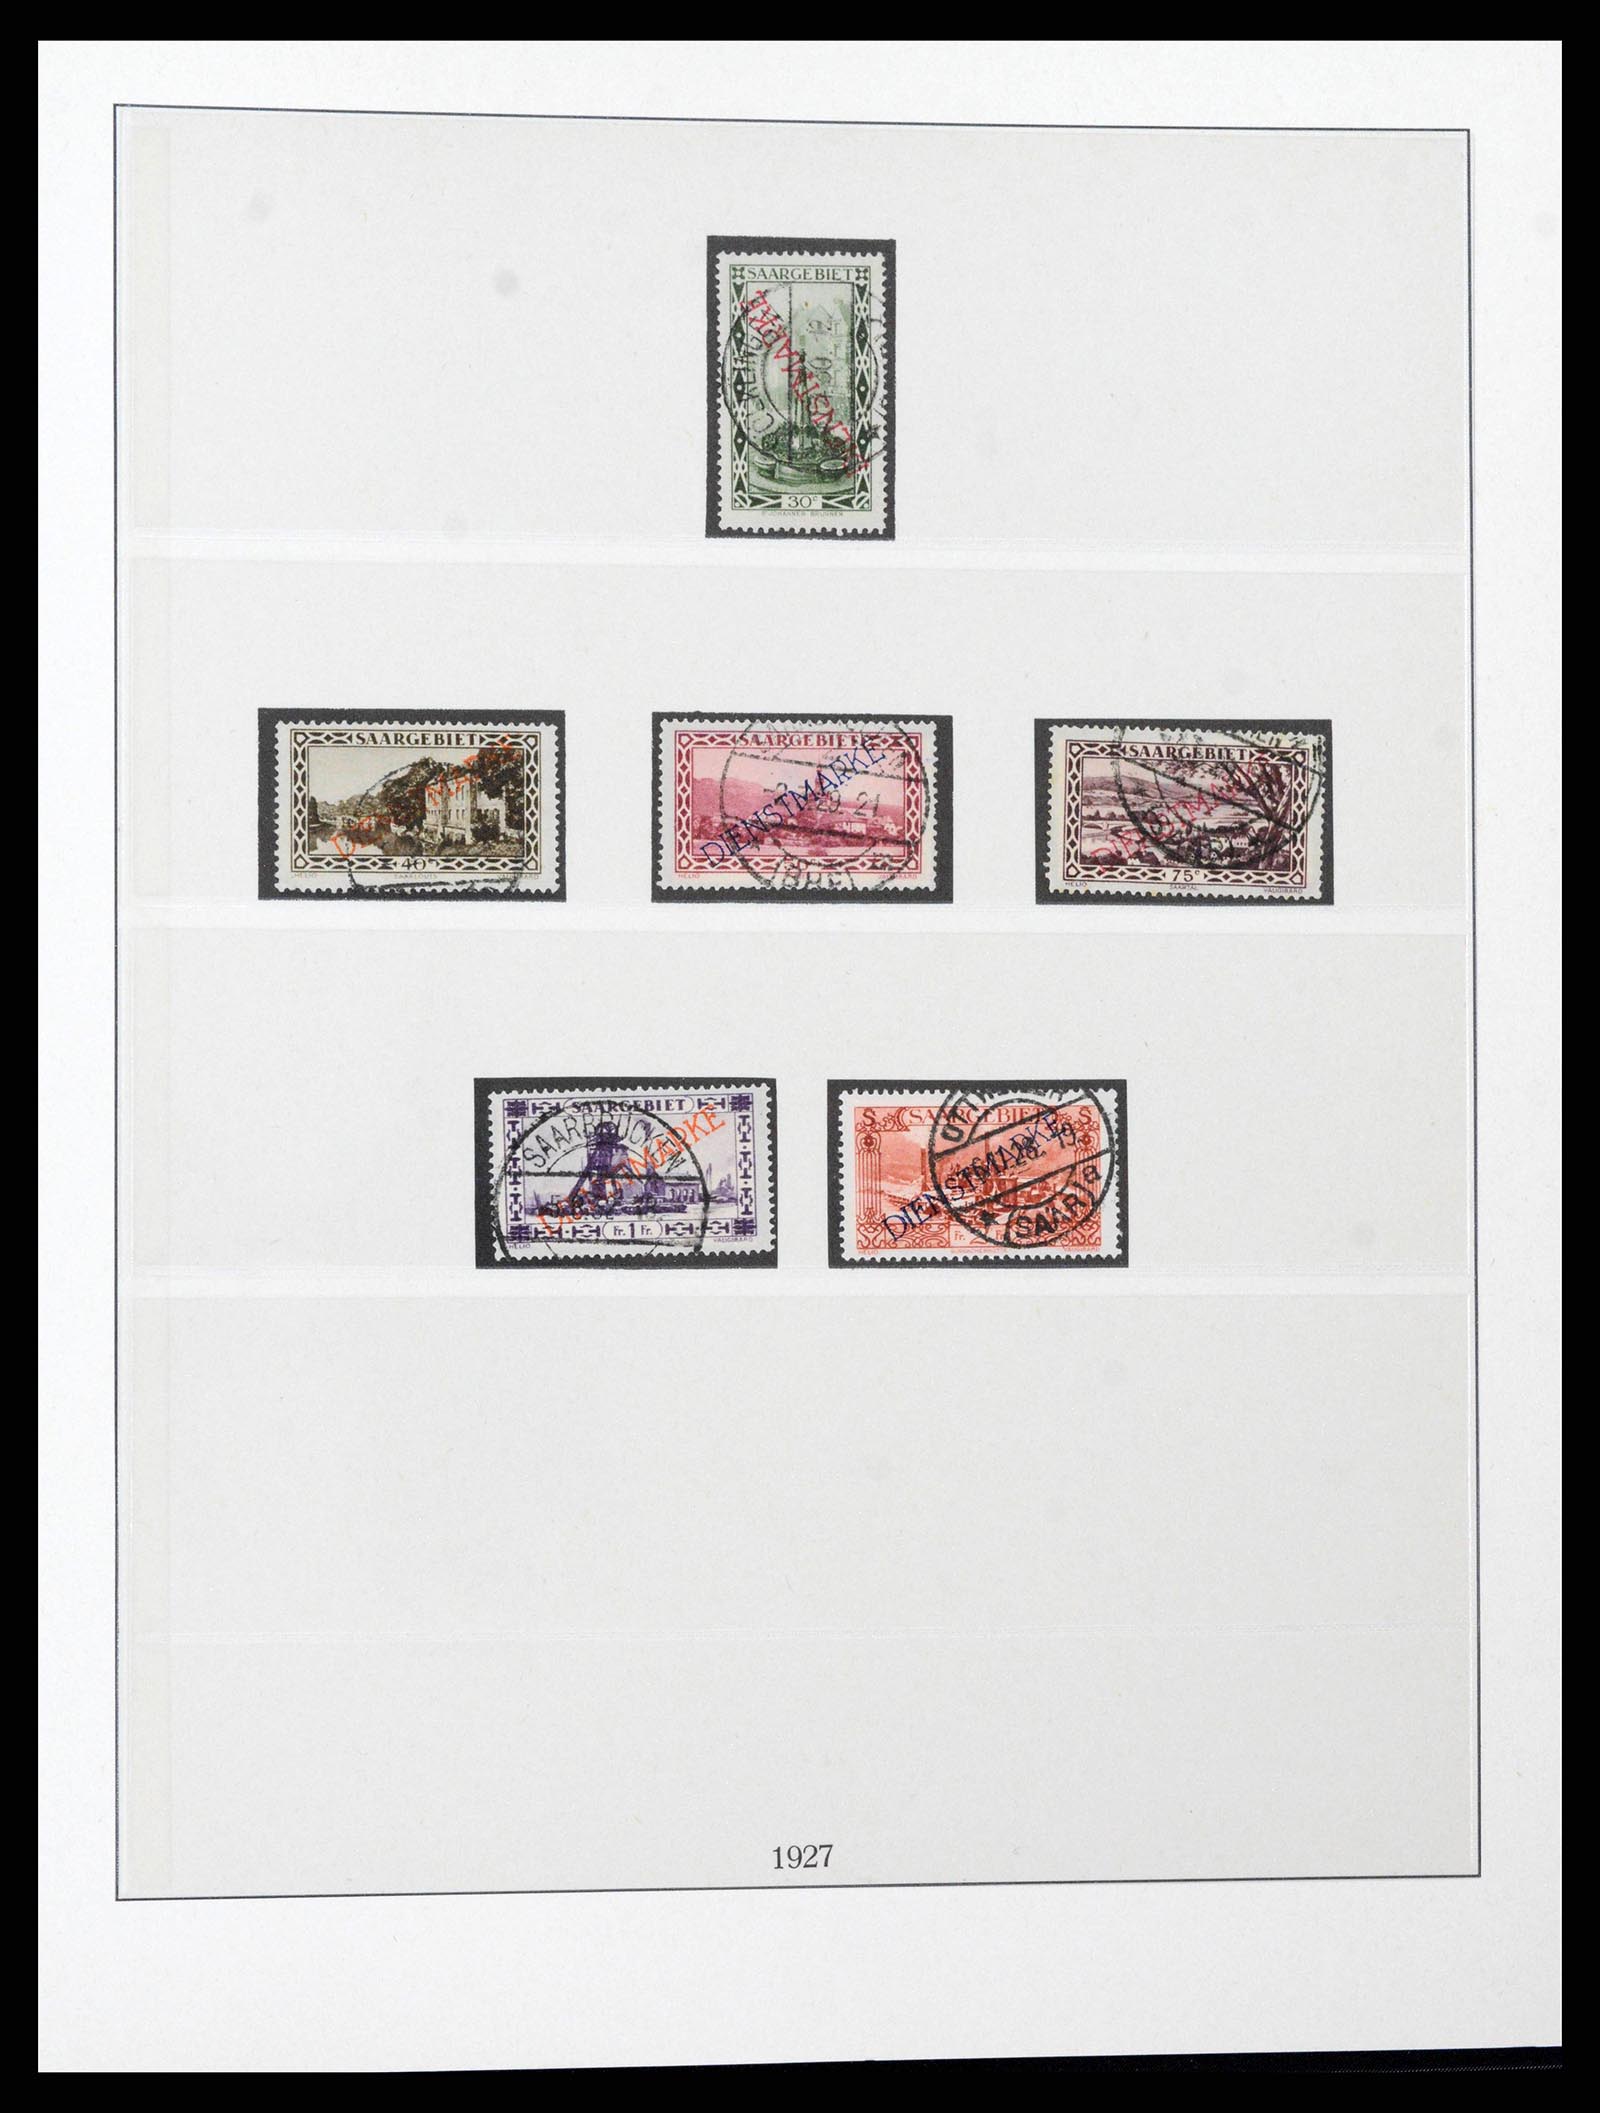 38833 0025 - Stamp collection 38833 Saar 1920-1935.